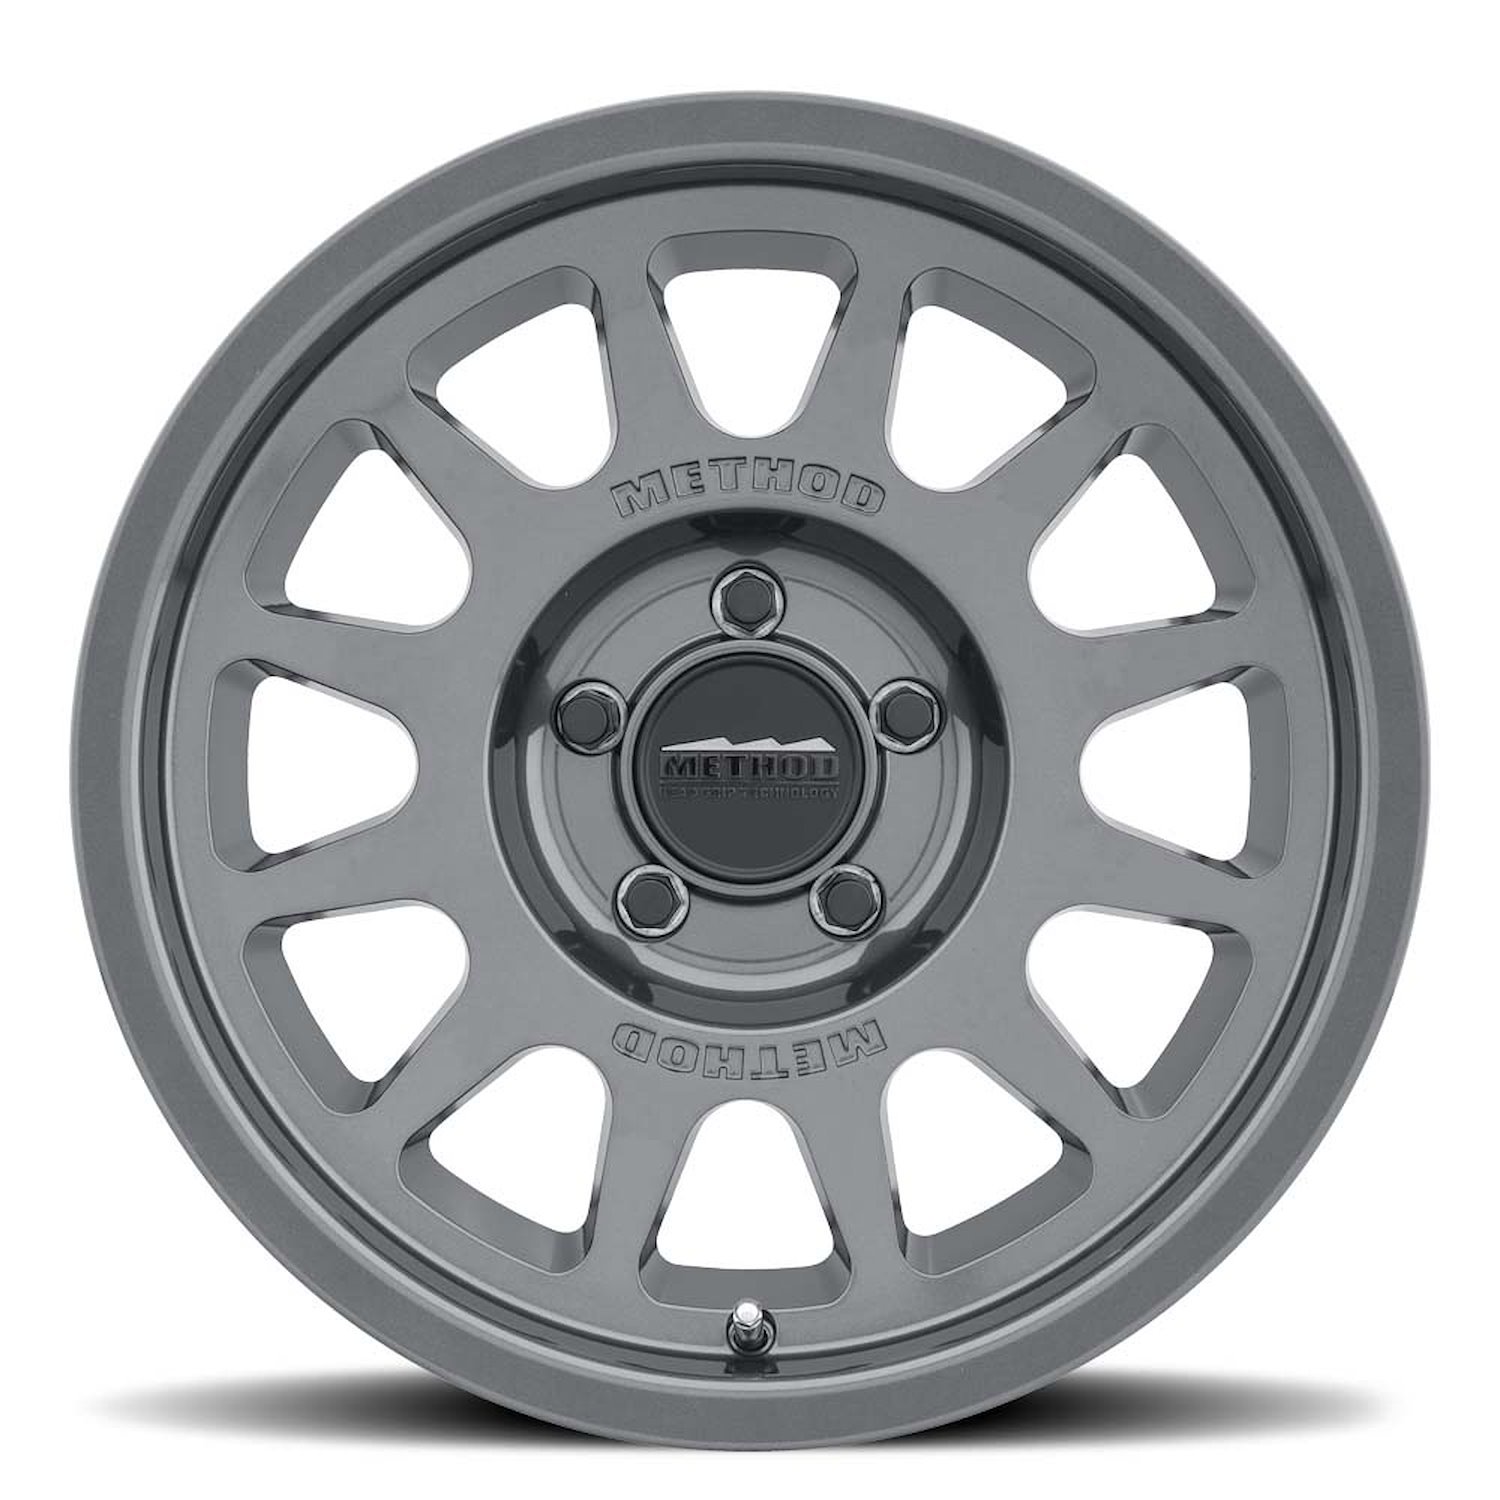 MR70378558835 TRAIL MR703 Bead Grip Wheel [Size: 17" x 8.5"] Gloss Titanium